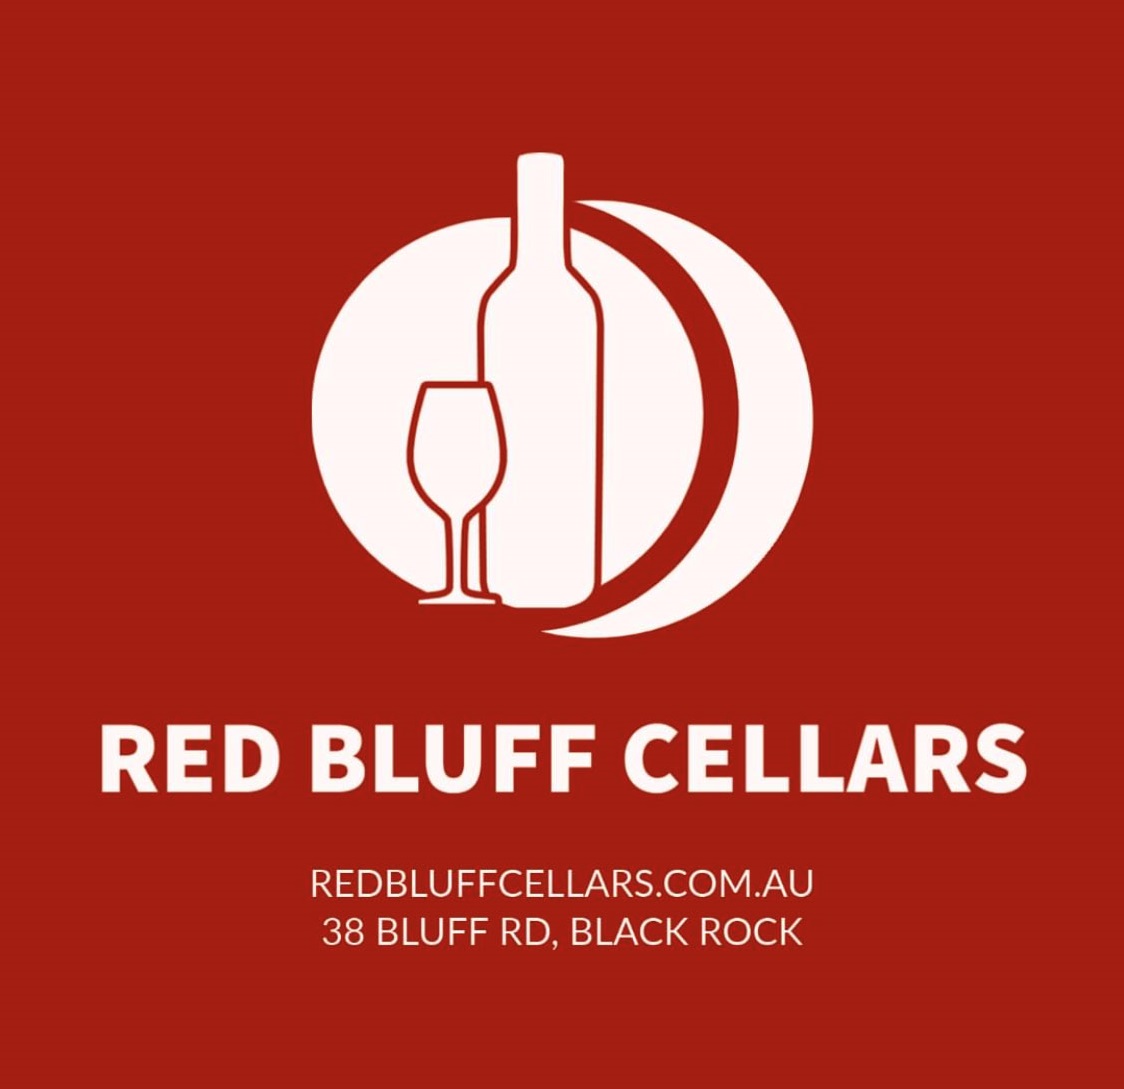 Red Bluff Cellars